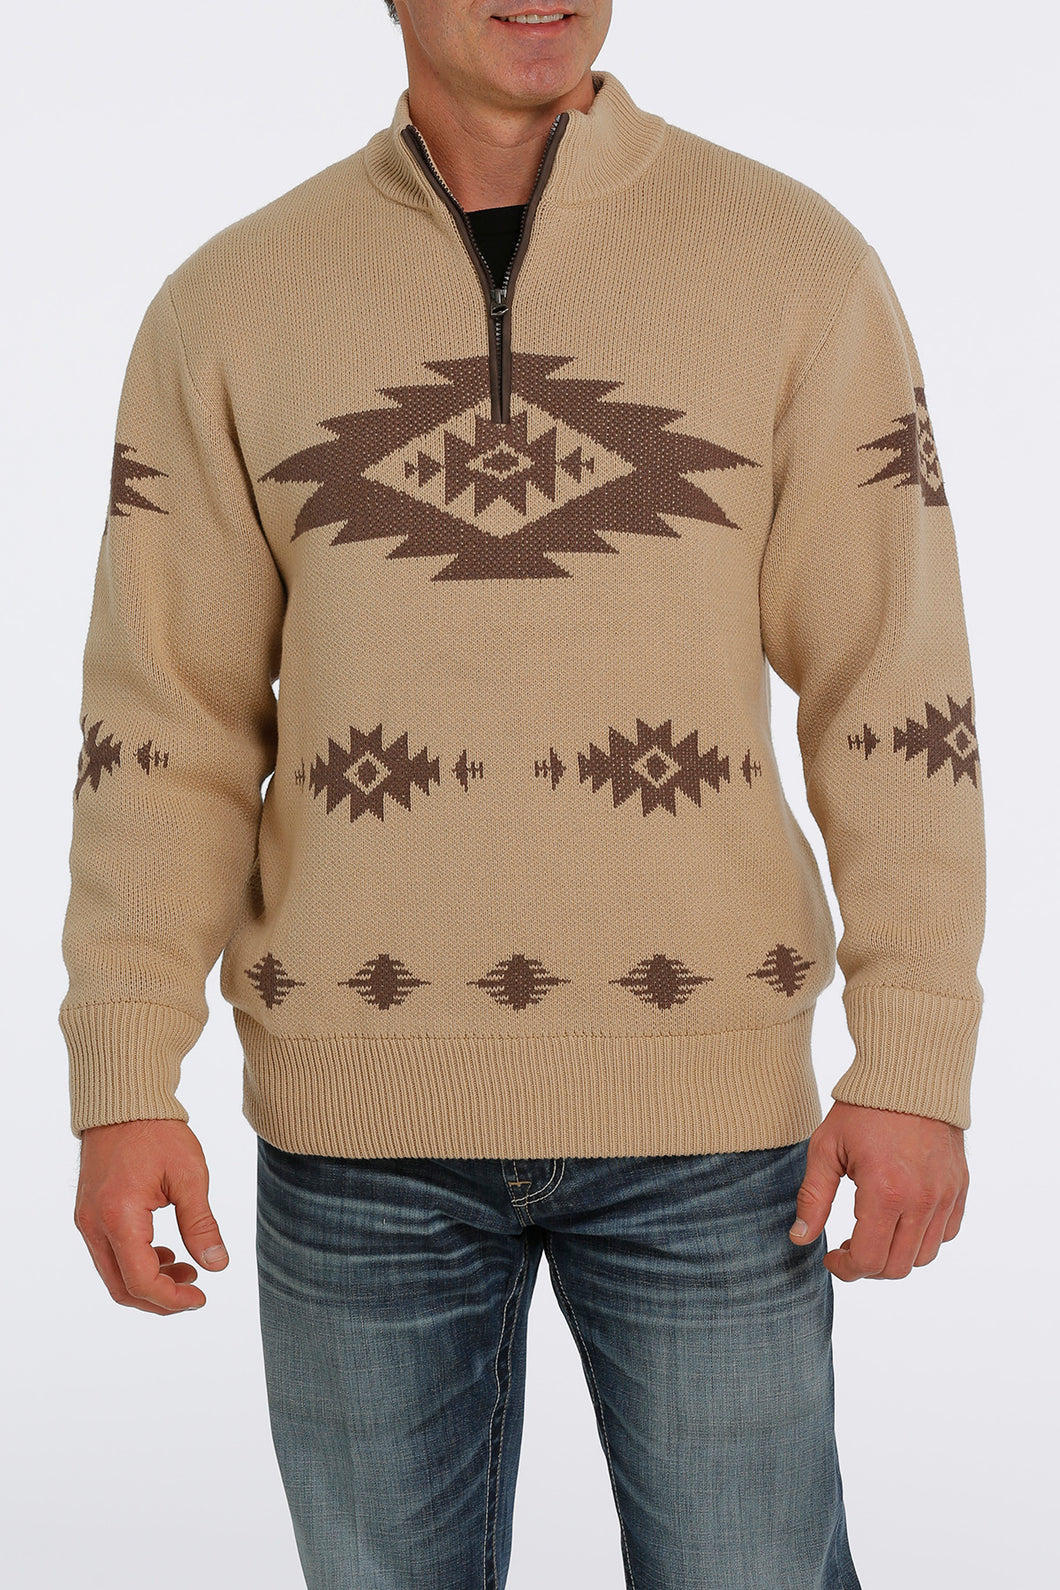 Pard's Western Shop Cinch Men's Khaki Aztec Print 1/4 Zip Sweater